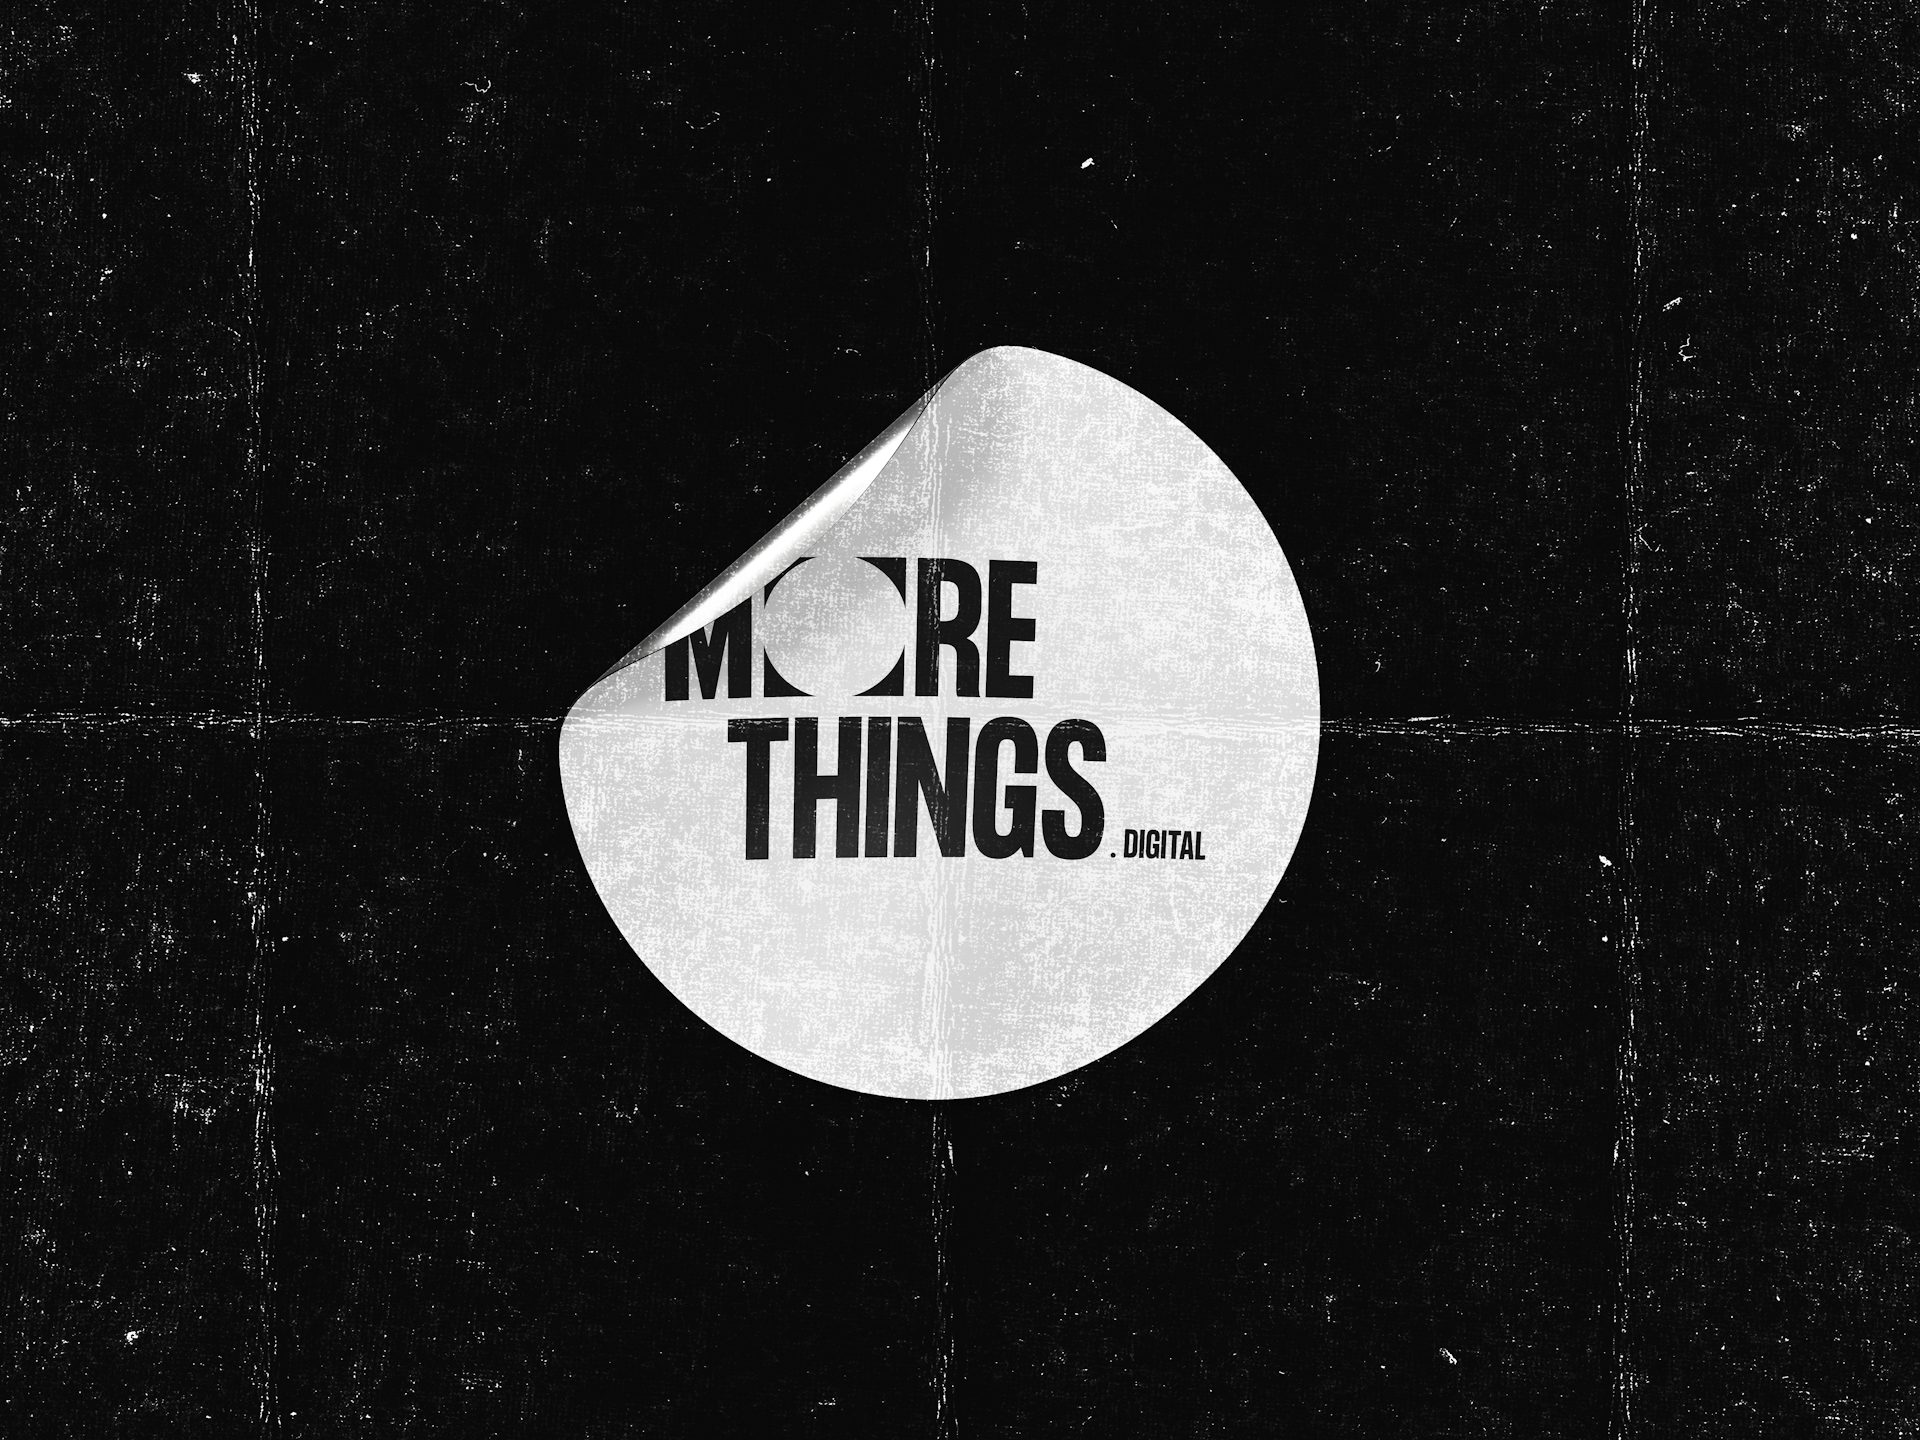 Morethings.digital sticker